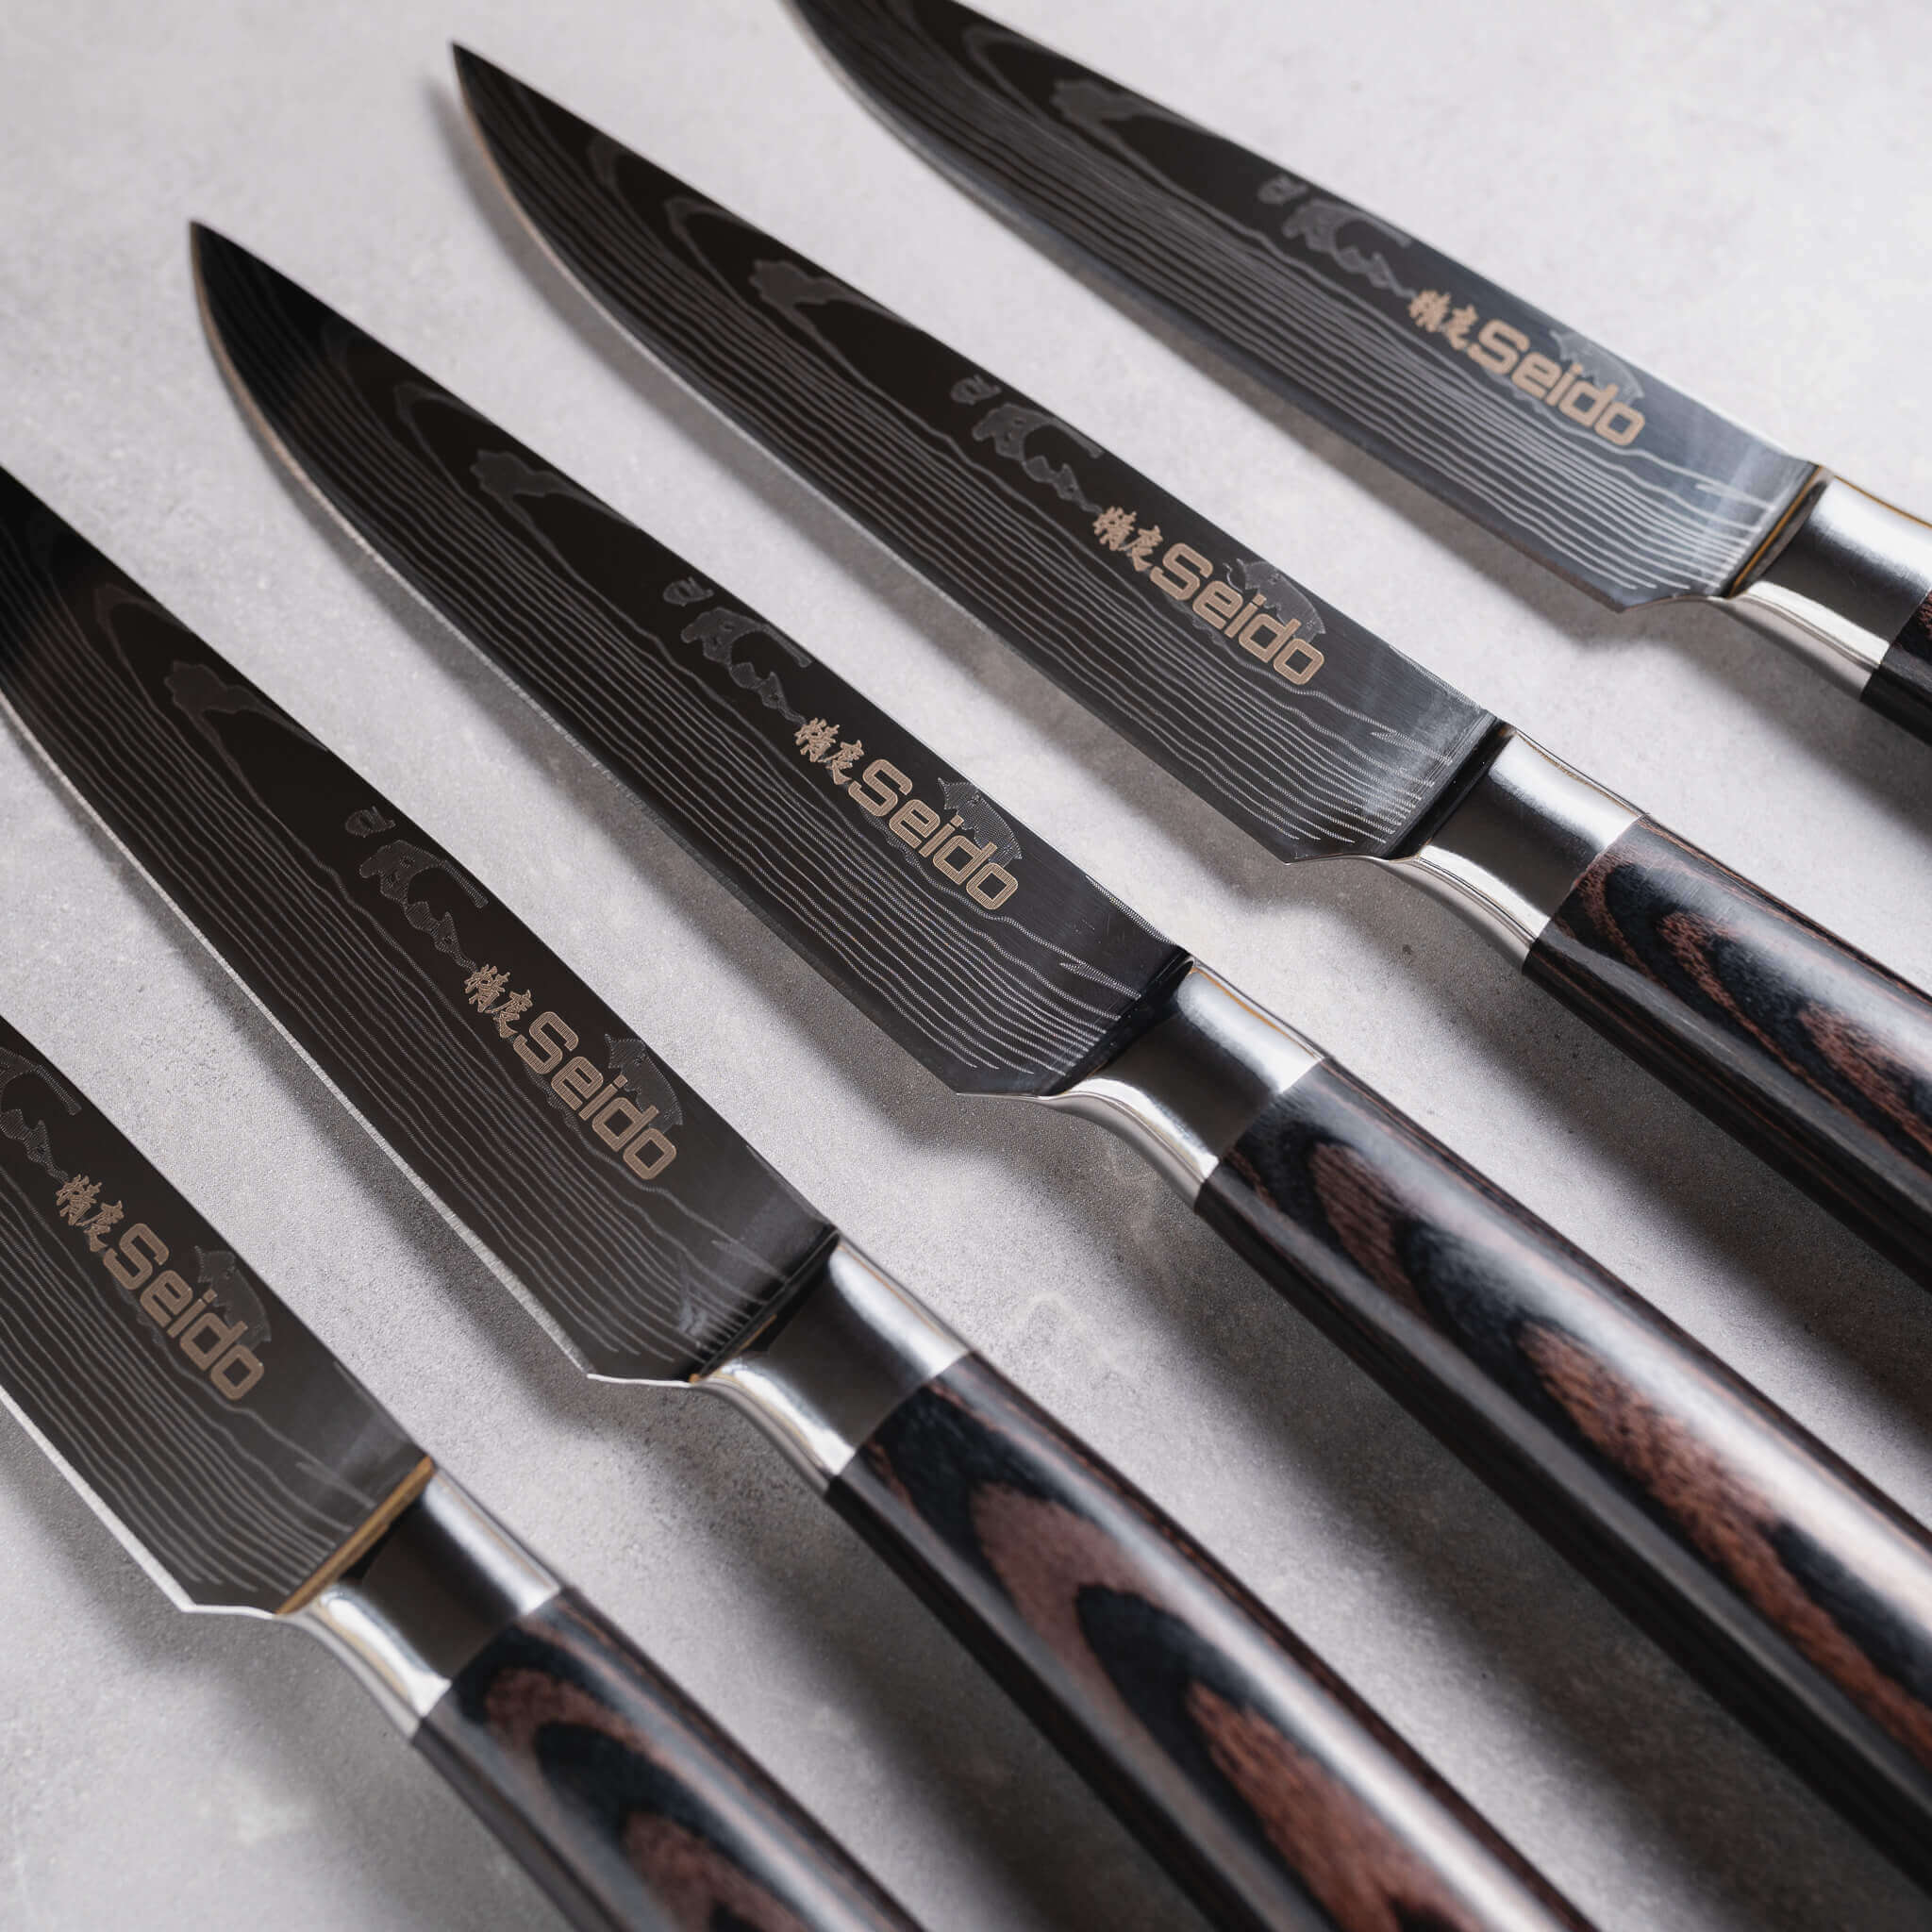 SIXILANG Steak Knives Set, Serrated Steak Knives Set of 8, German Stainless  Steel Steak Knife Serrated Dishwasher Safe, Home Gifts for Men and Women -  Yahoo Shopping